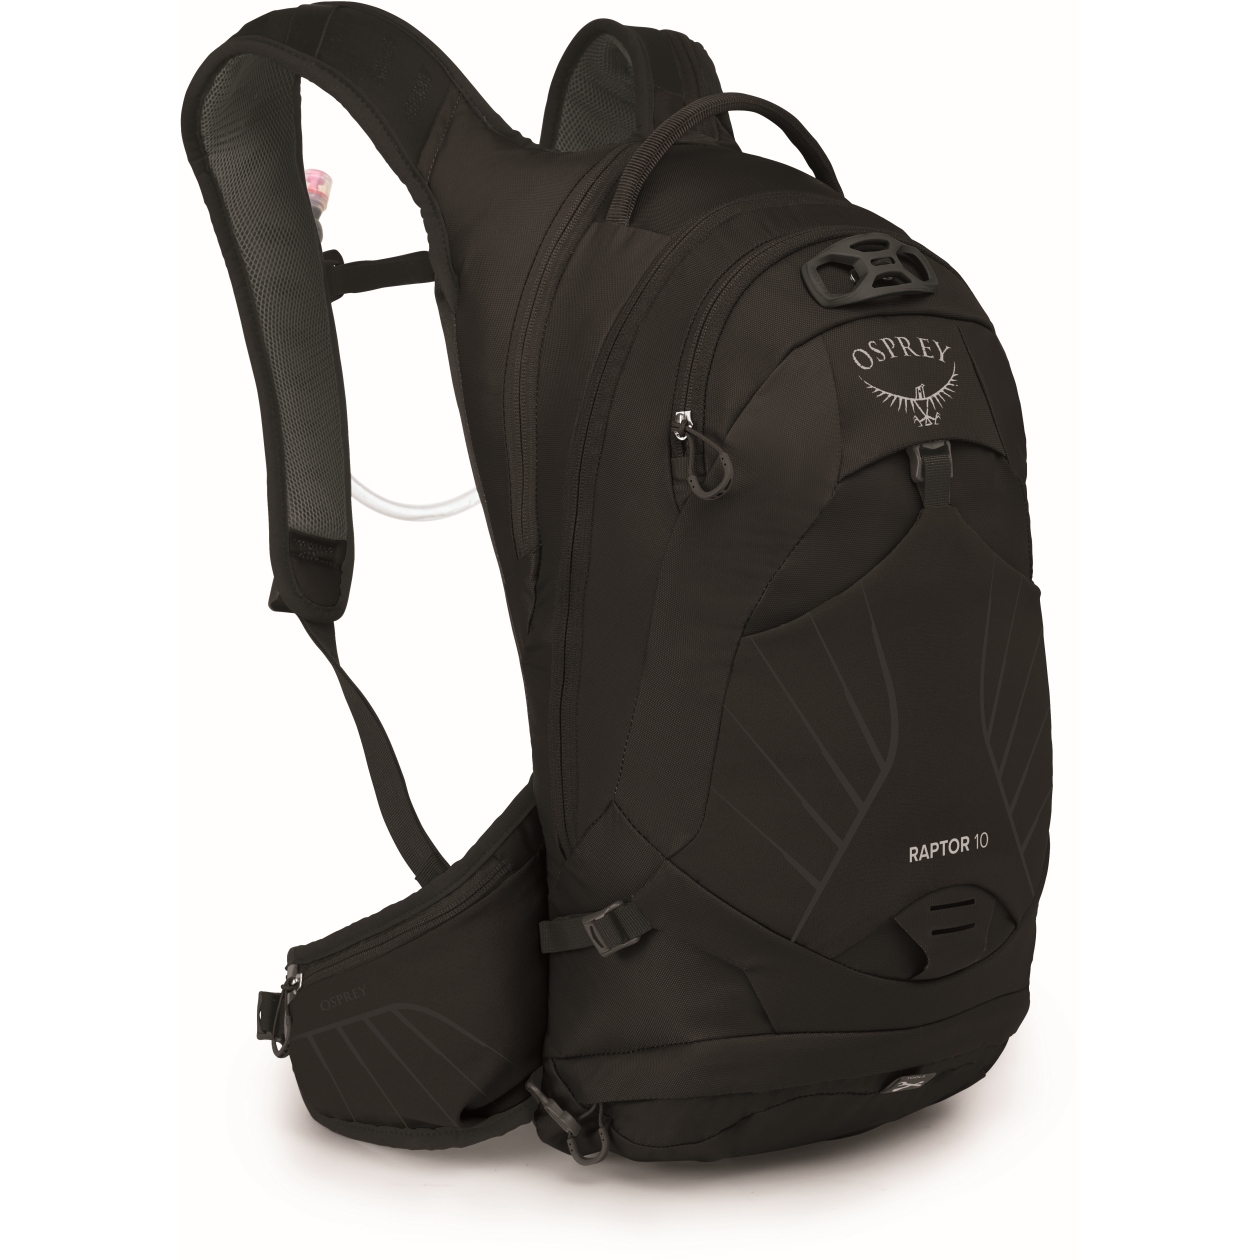 Productfoto van Osprey Raptor 10 Backpack + Hydration Pack - Black